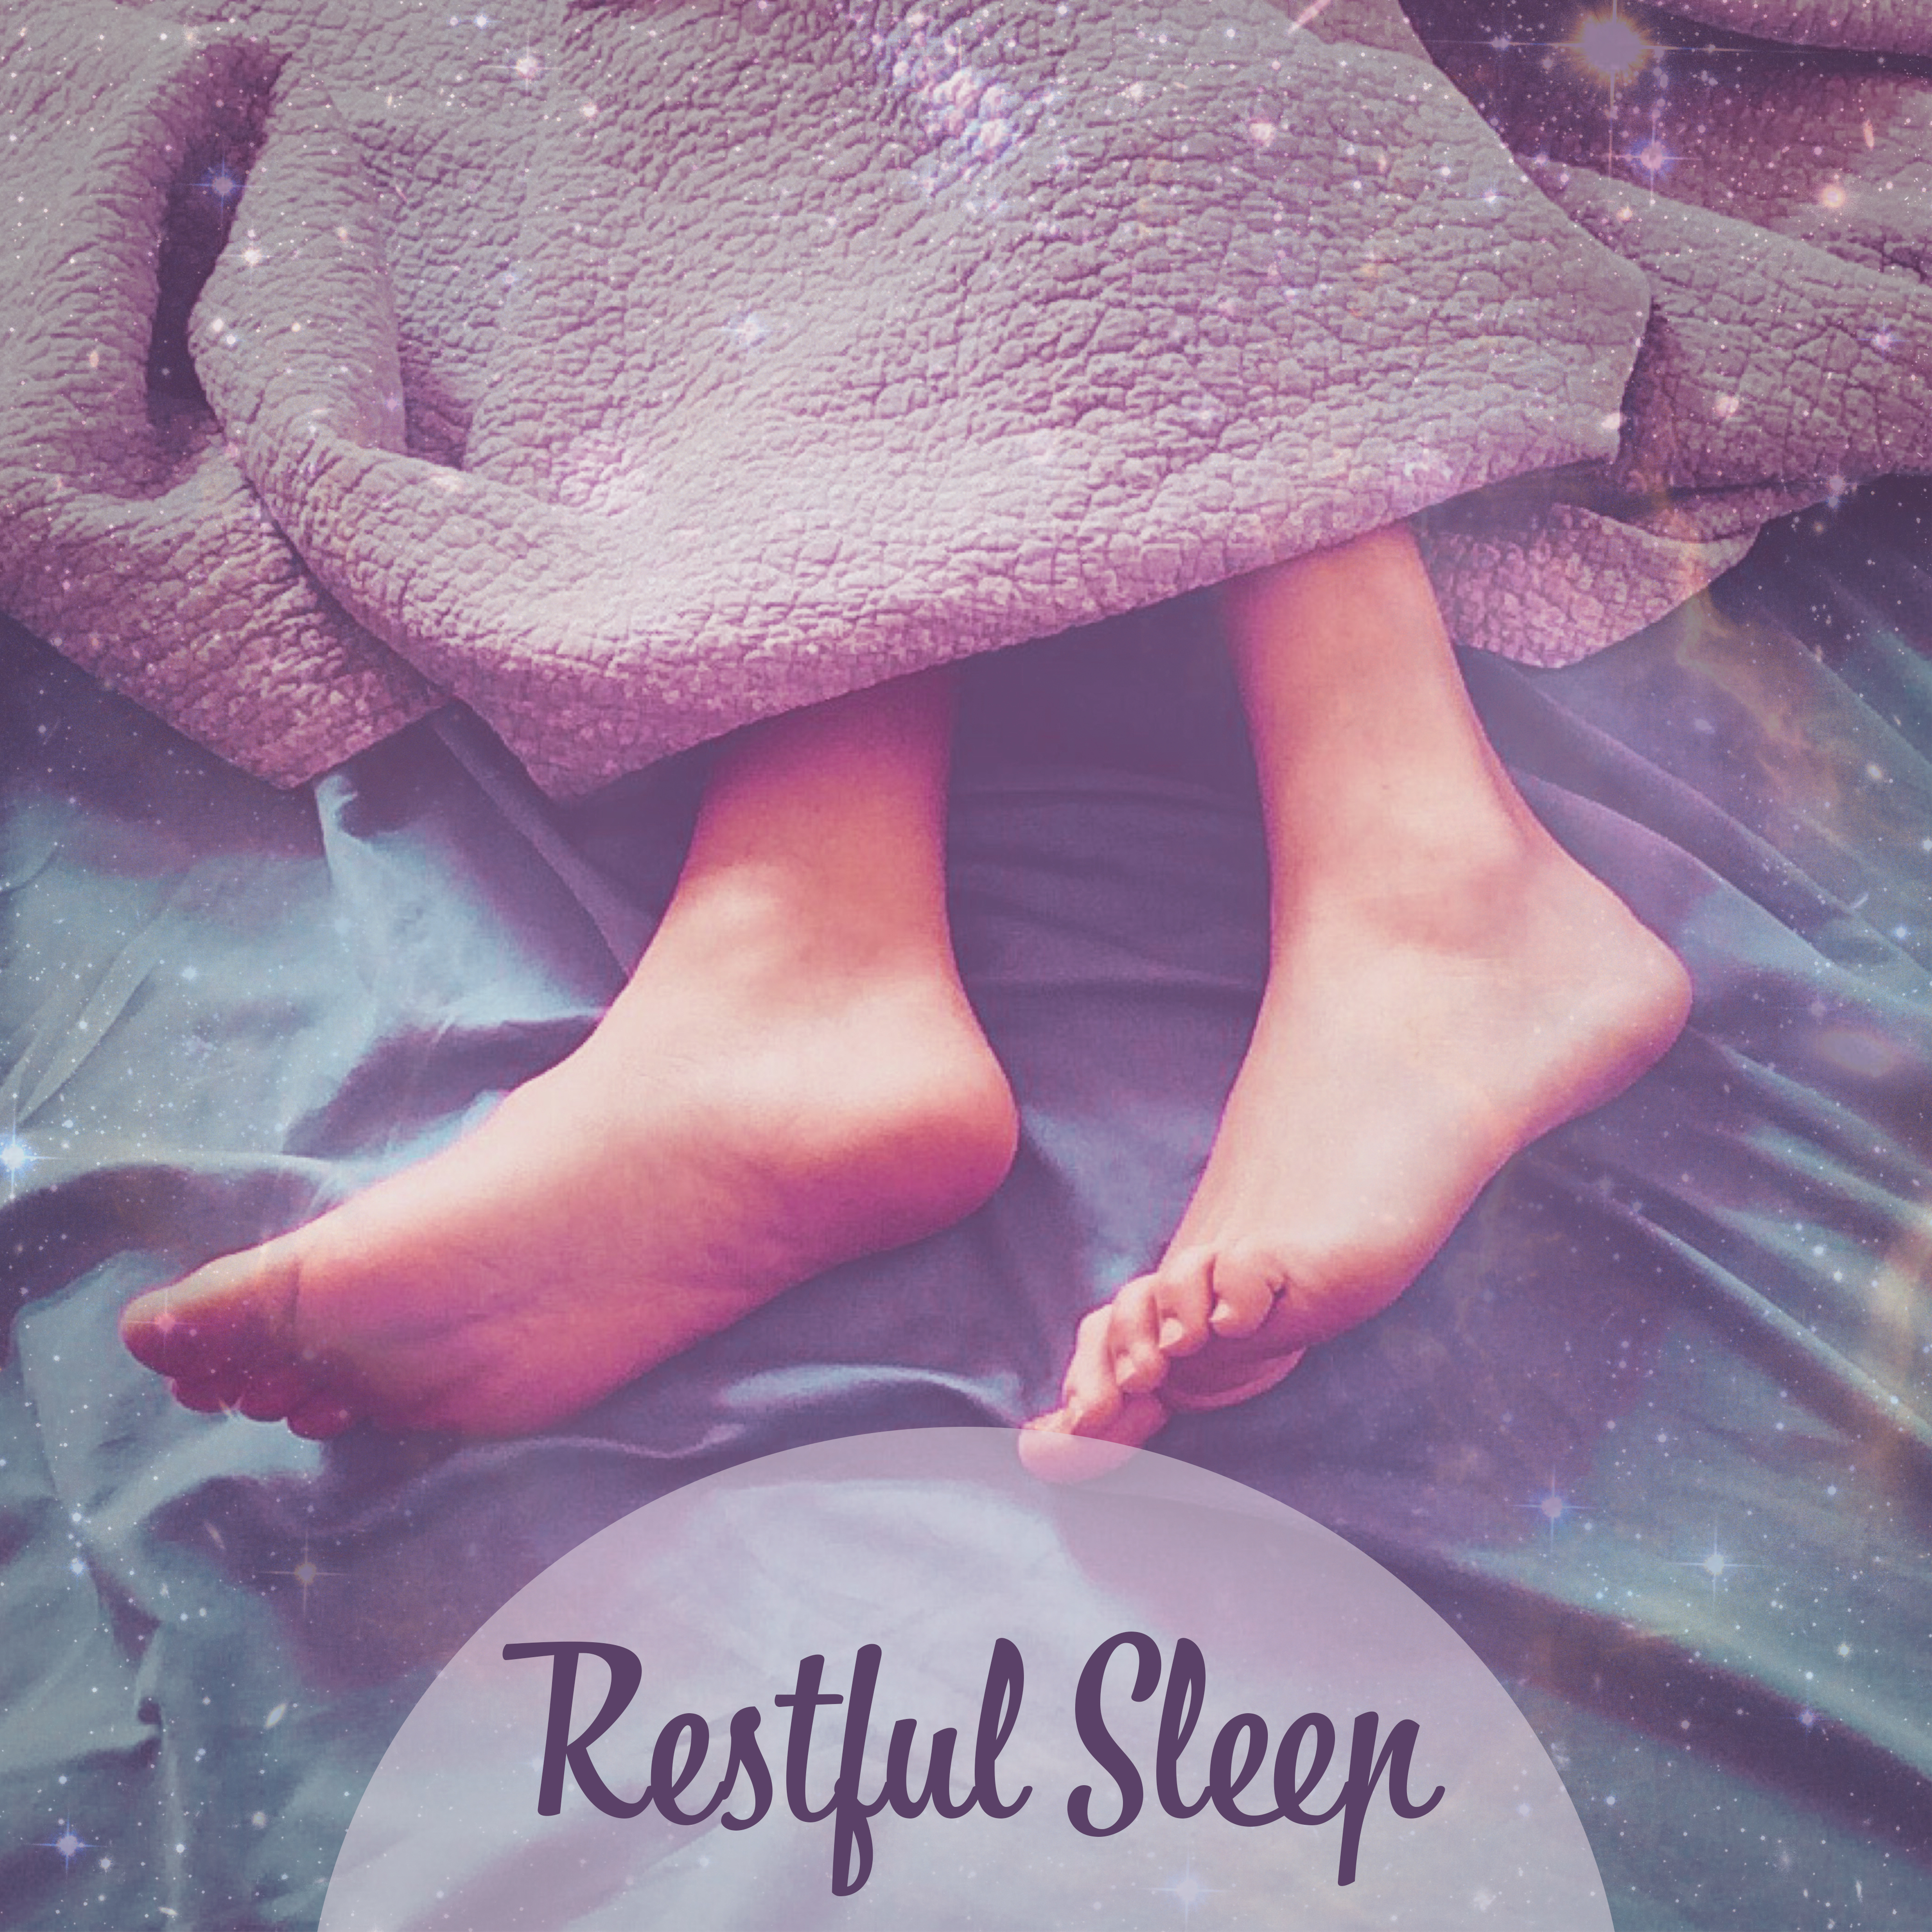 Restful Sleep  Inner Calmness, Relaxing Music for Sleep, Deep Relief, Sweet Dreams, Healing Sounds at Night, Rest